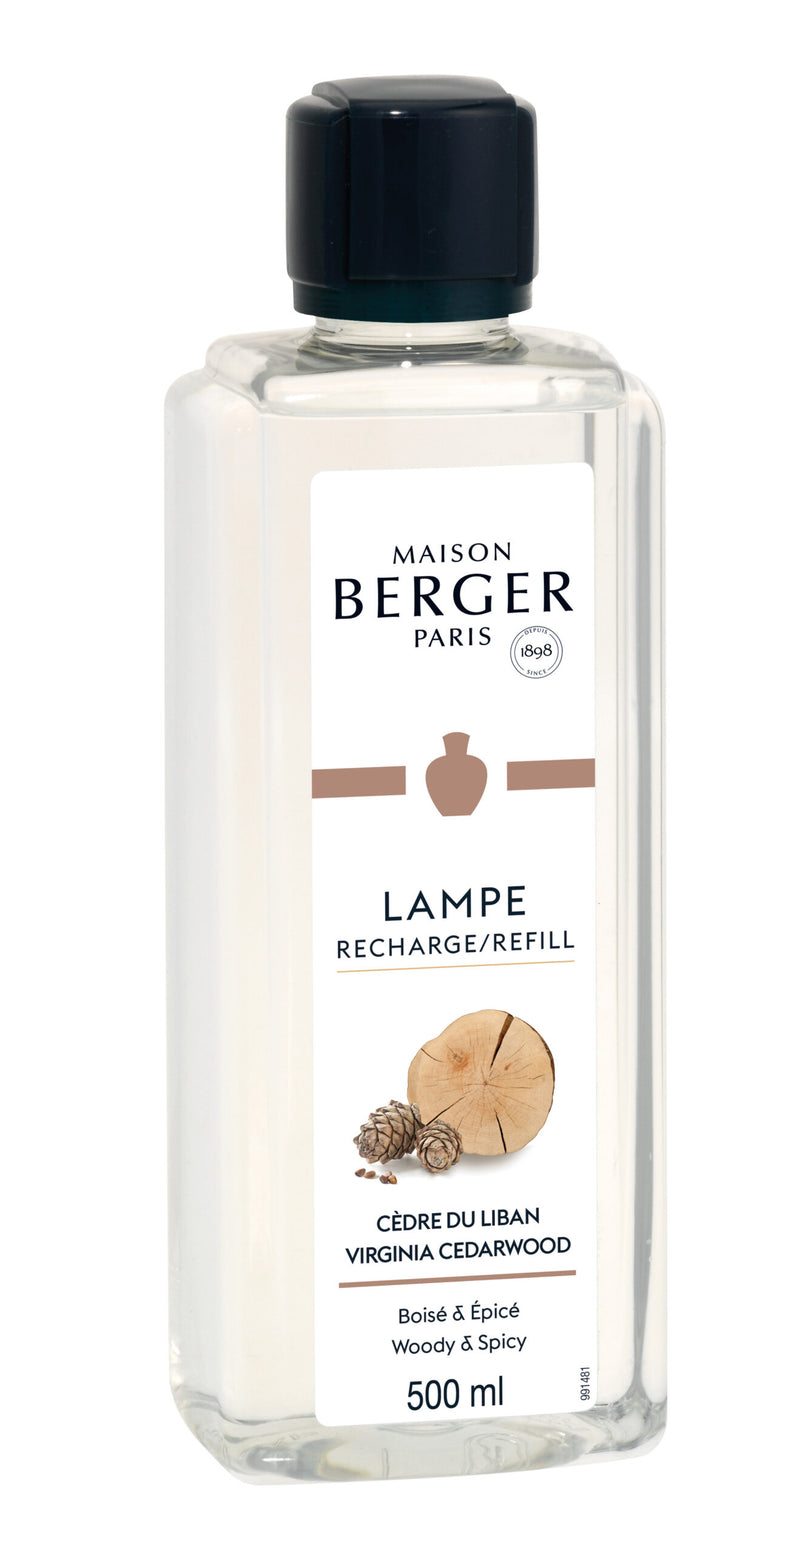 Lampe Berger huisparfum 500 ml -  Virginia cedarwood / Cèdre du Liban